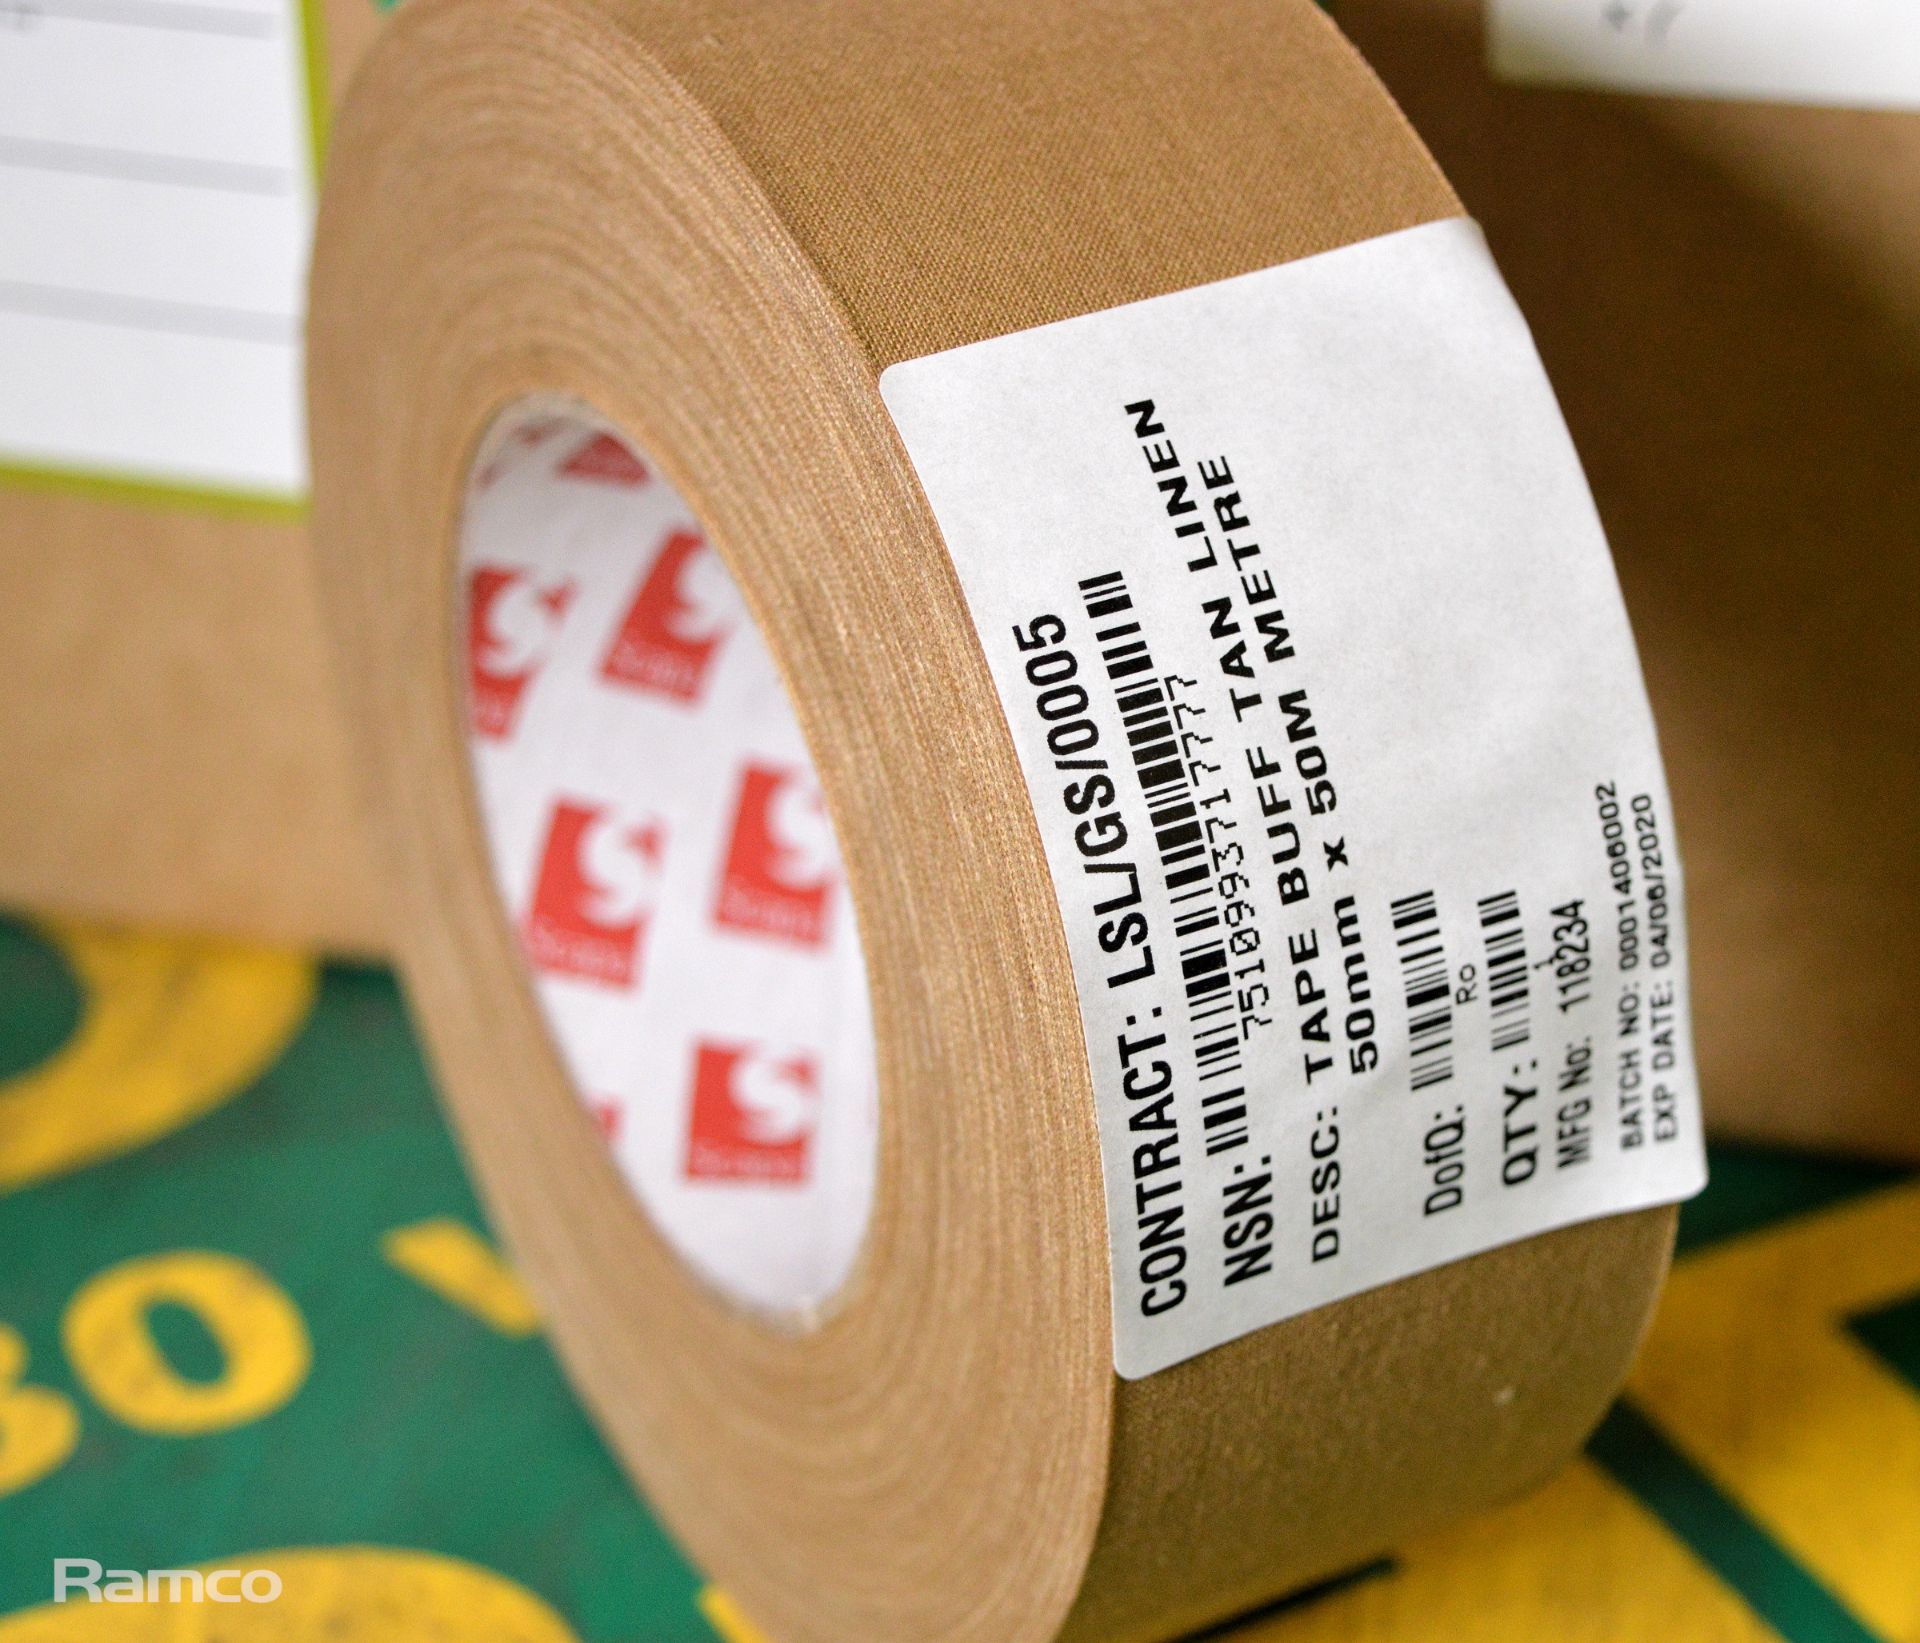 Scapa 3302 cloth adhesive tape 50mm x 50M - 16 per box - 1 box - Image 2 of 2